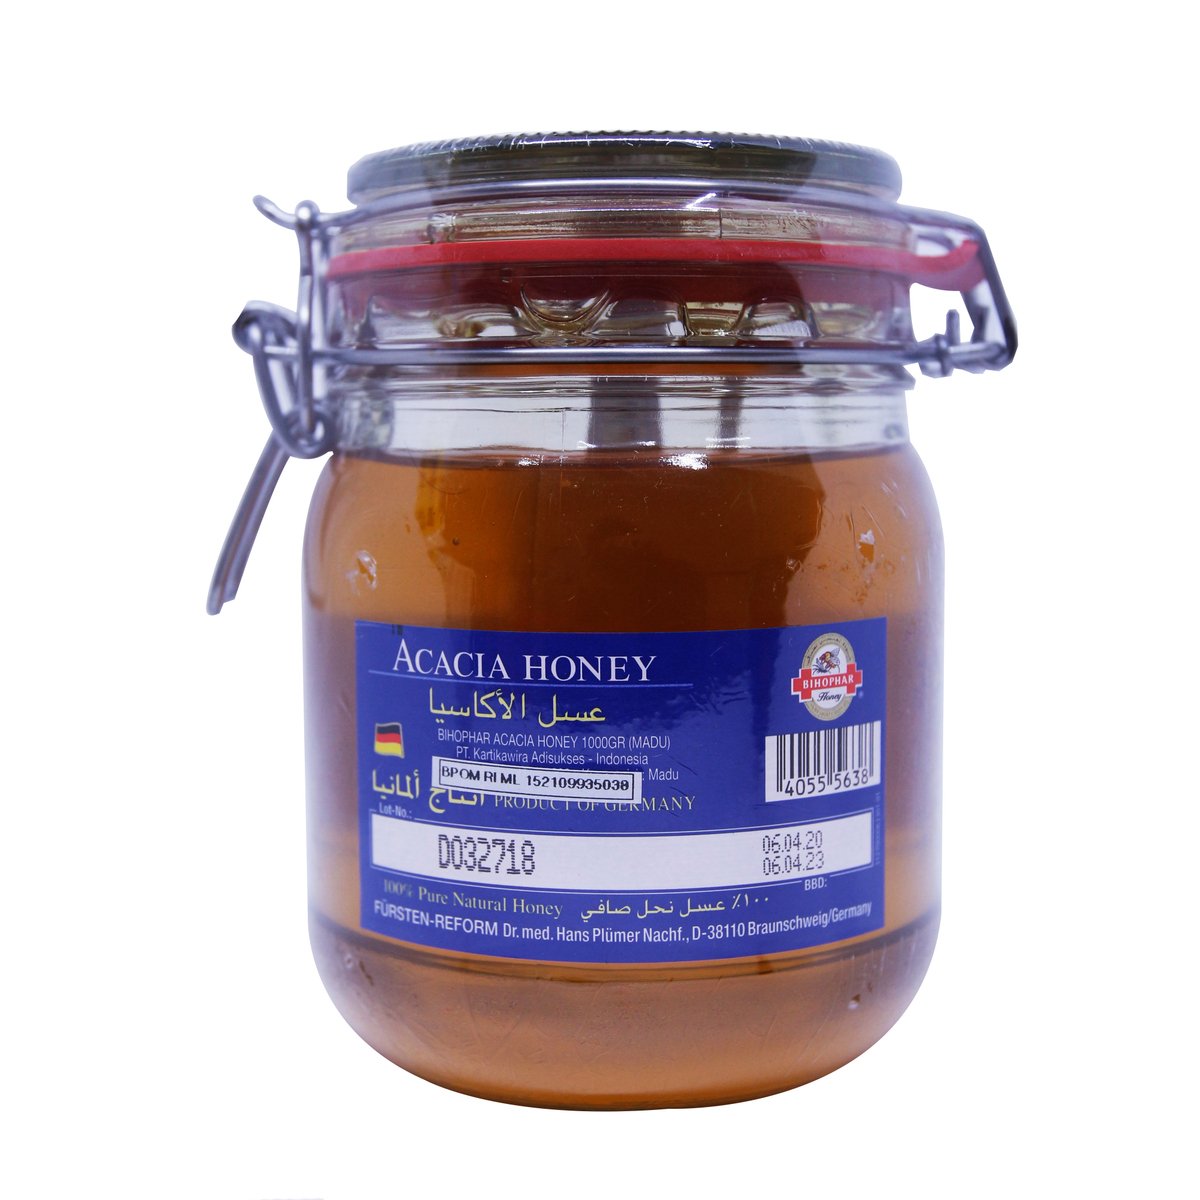 Bihophar Acacia Honey 1kg